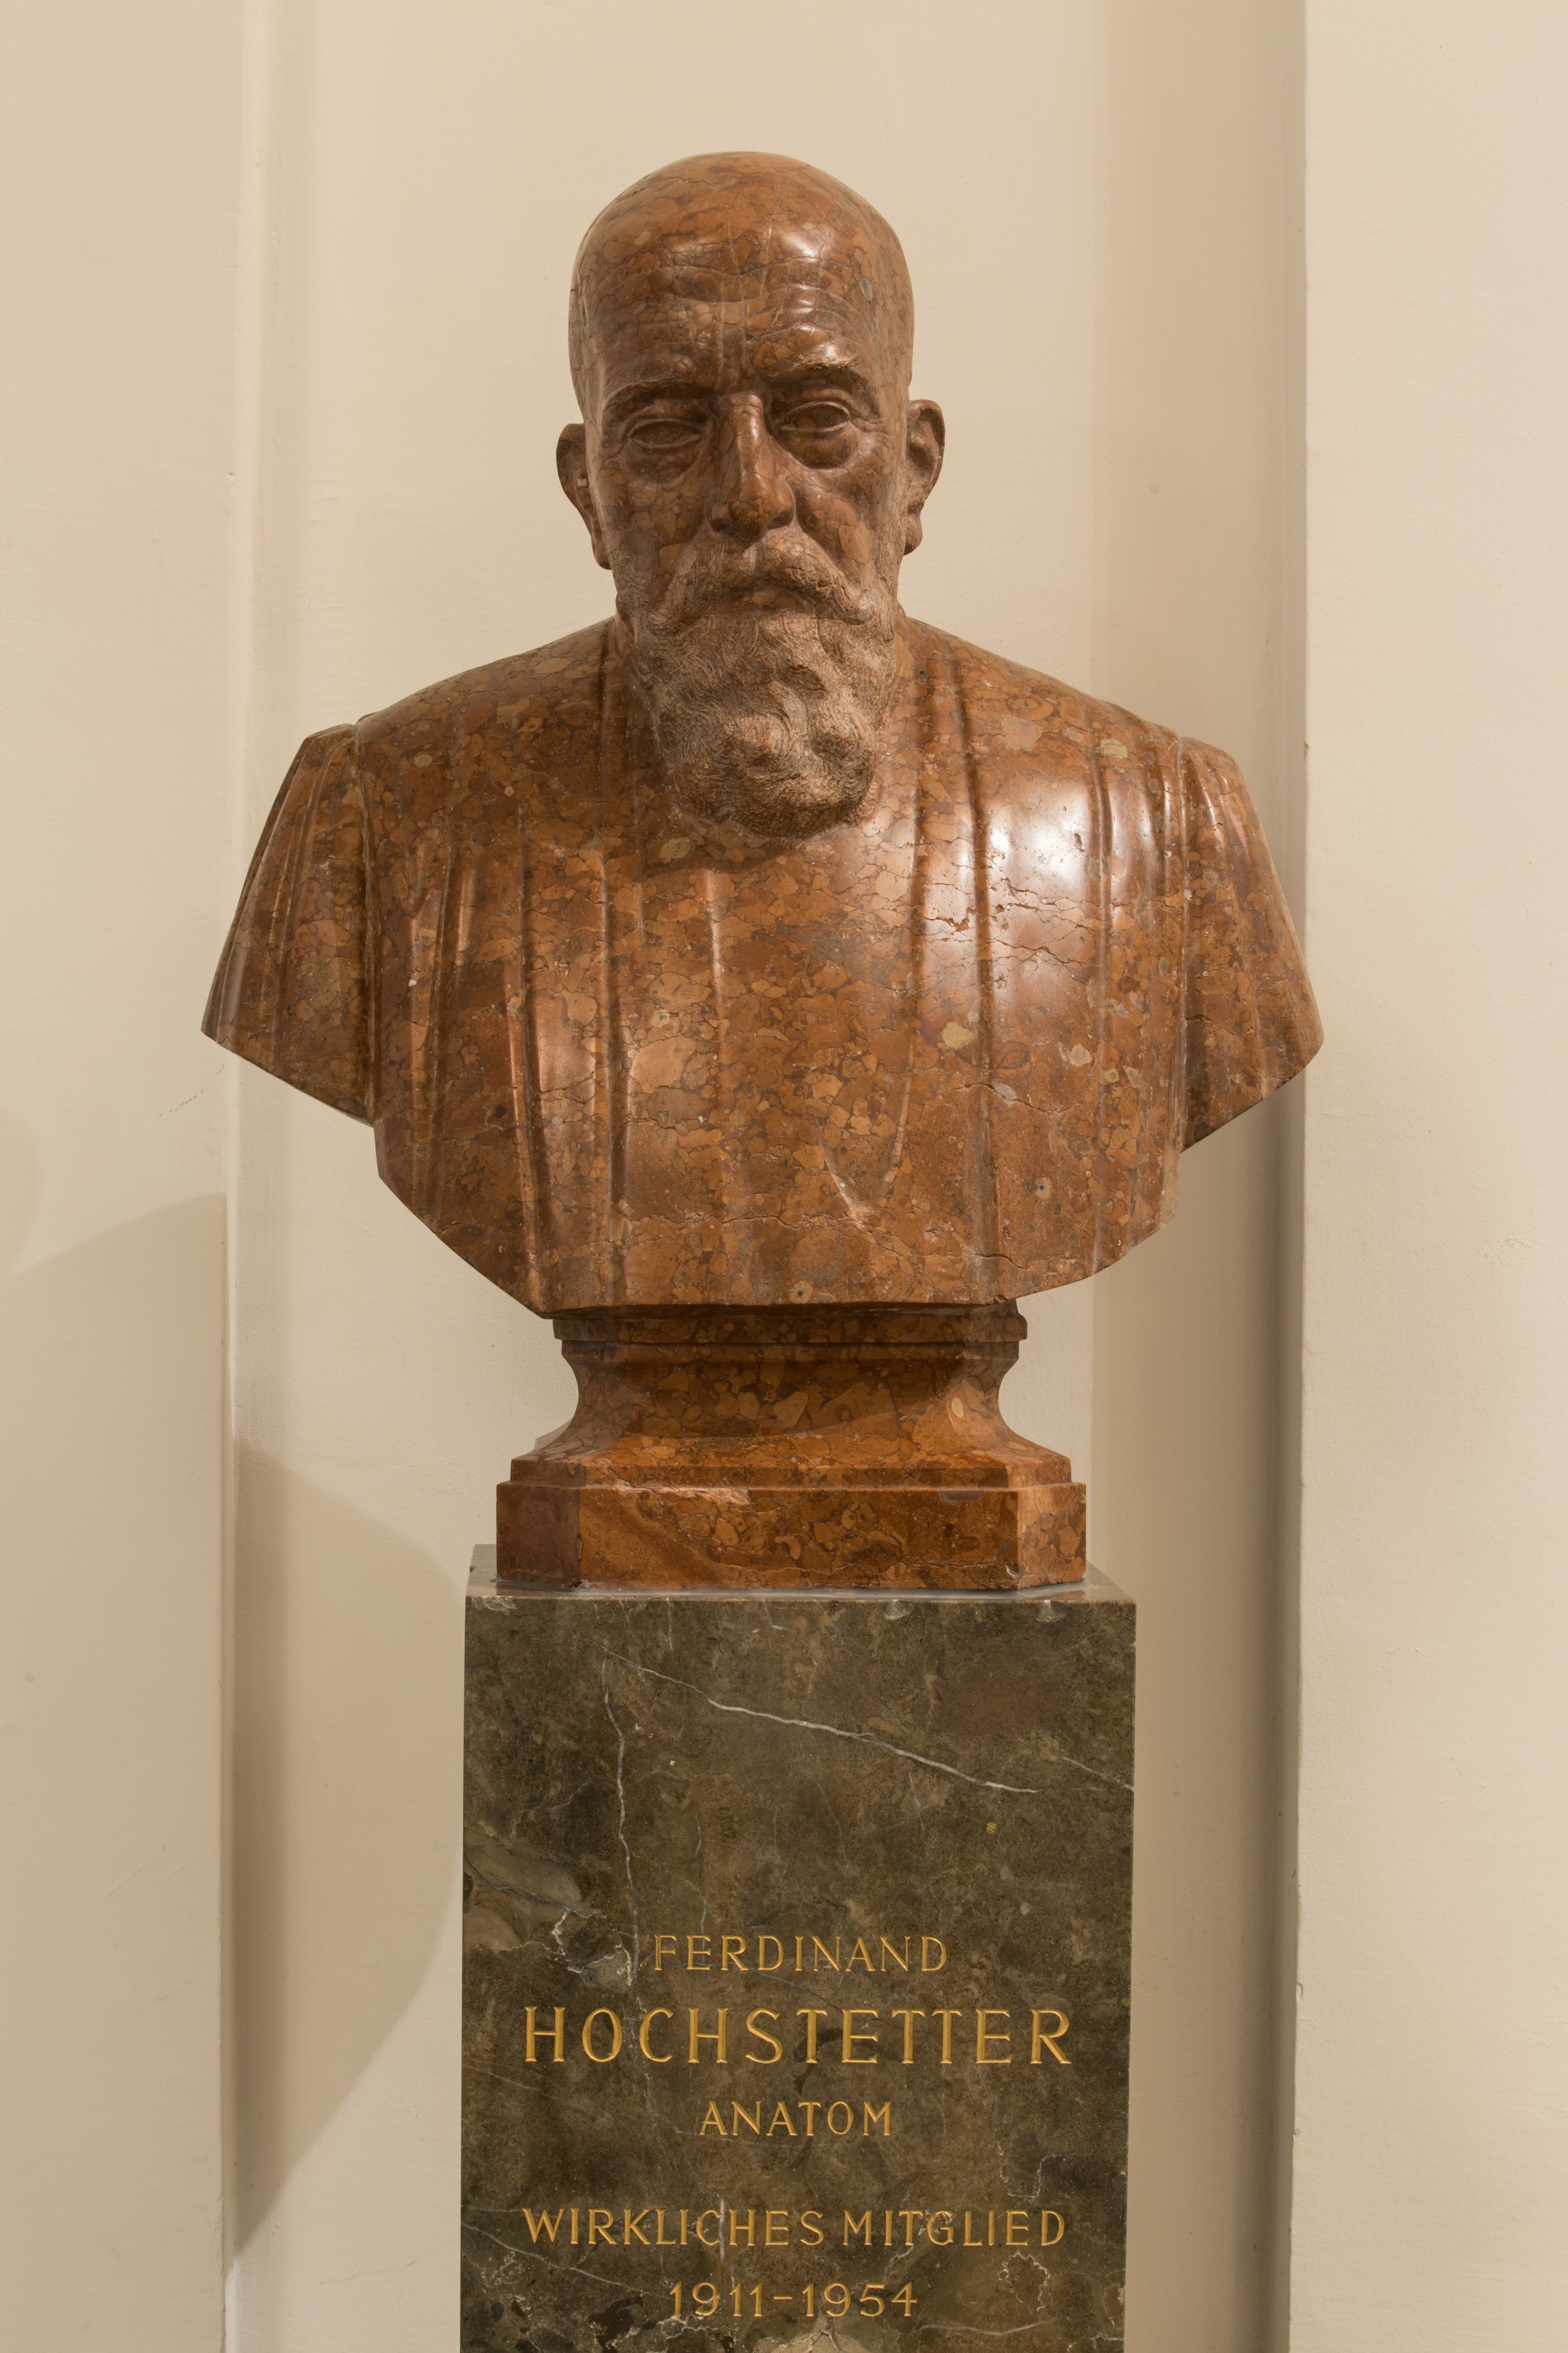 Ferdinand Hochstetter, Anatom - Bust in the Aula of the Academy of Sciences, Vienna - hu -8576